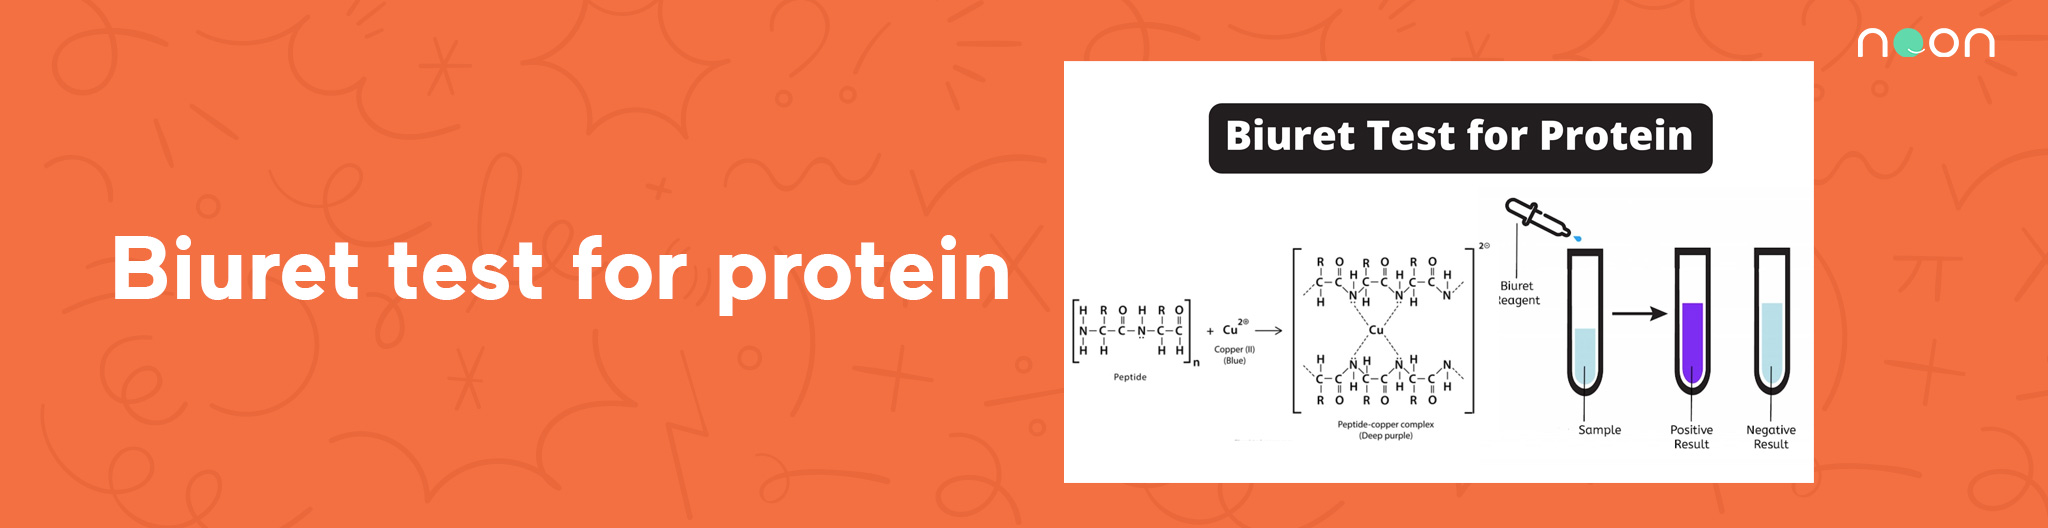 Biuret test for protein